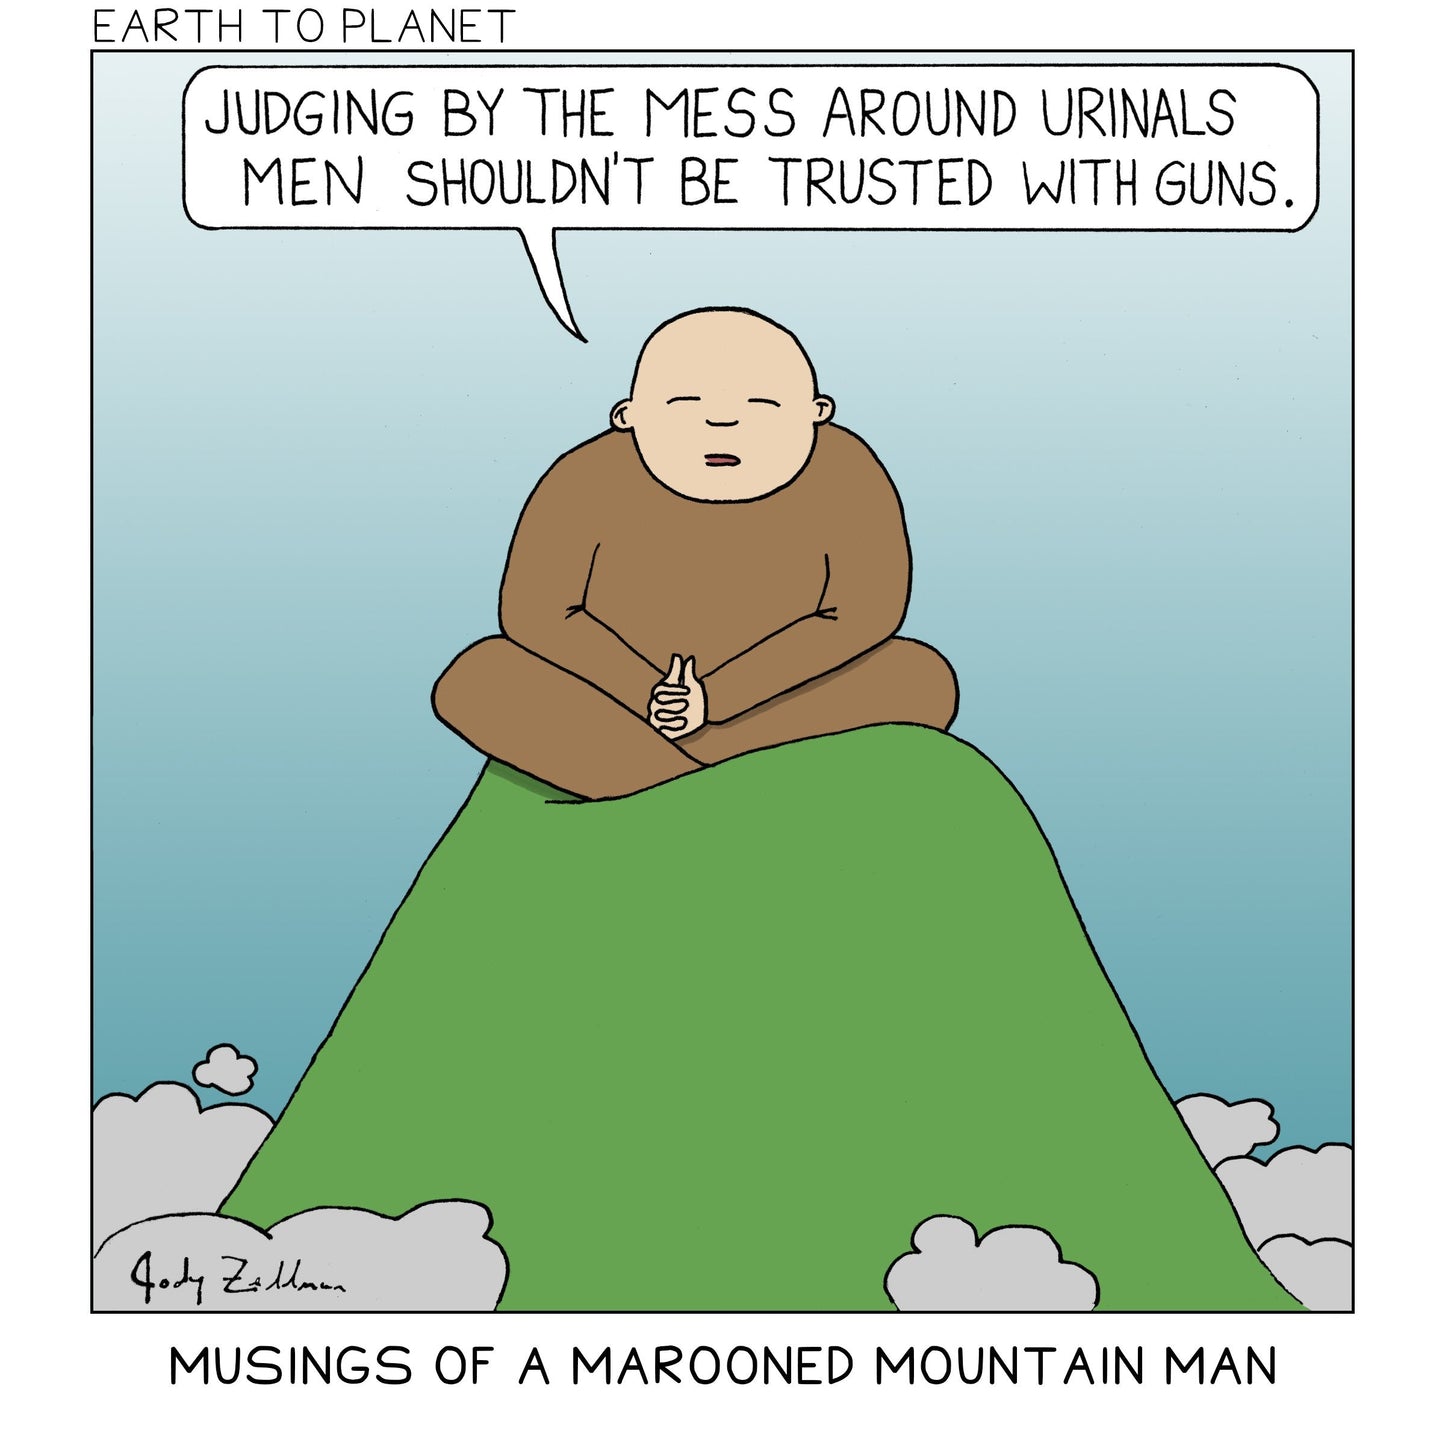 Musings of a Marooned Mountain Man - Urinals Cartoon